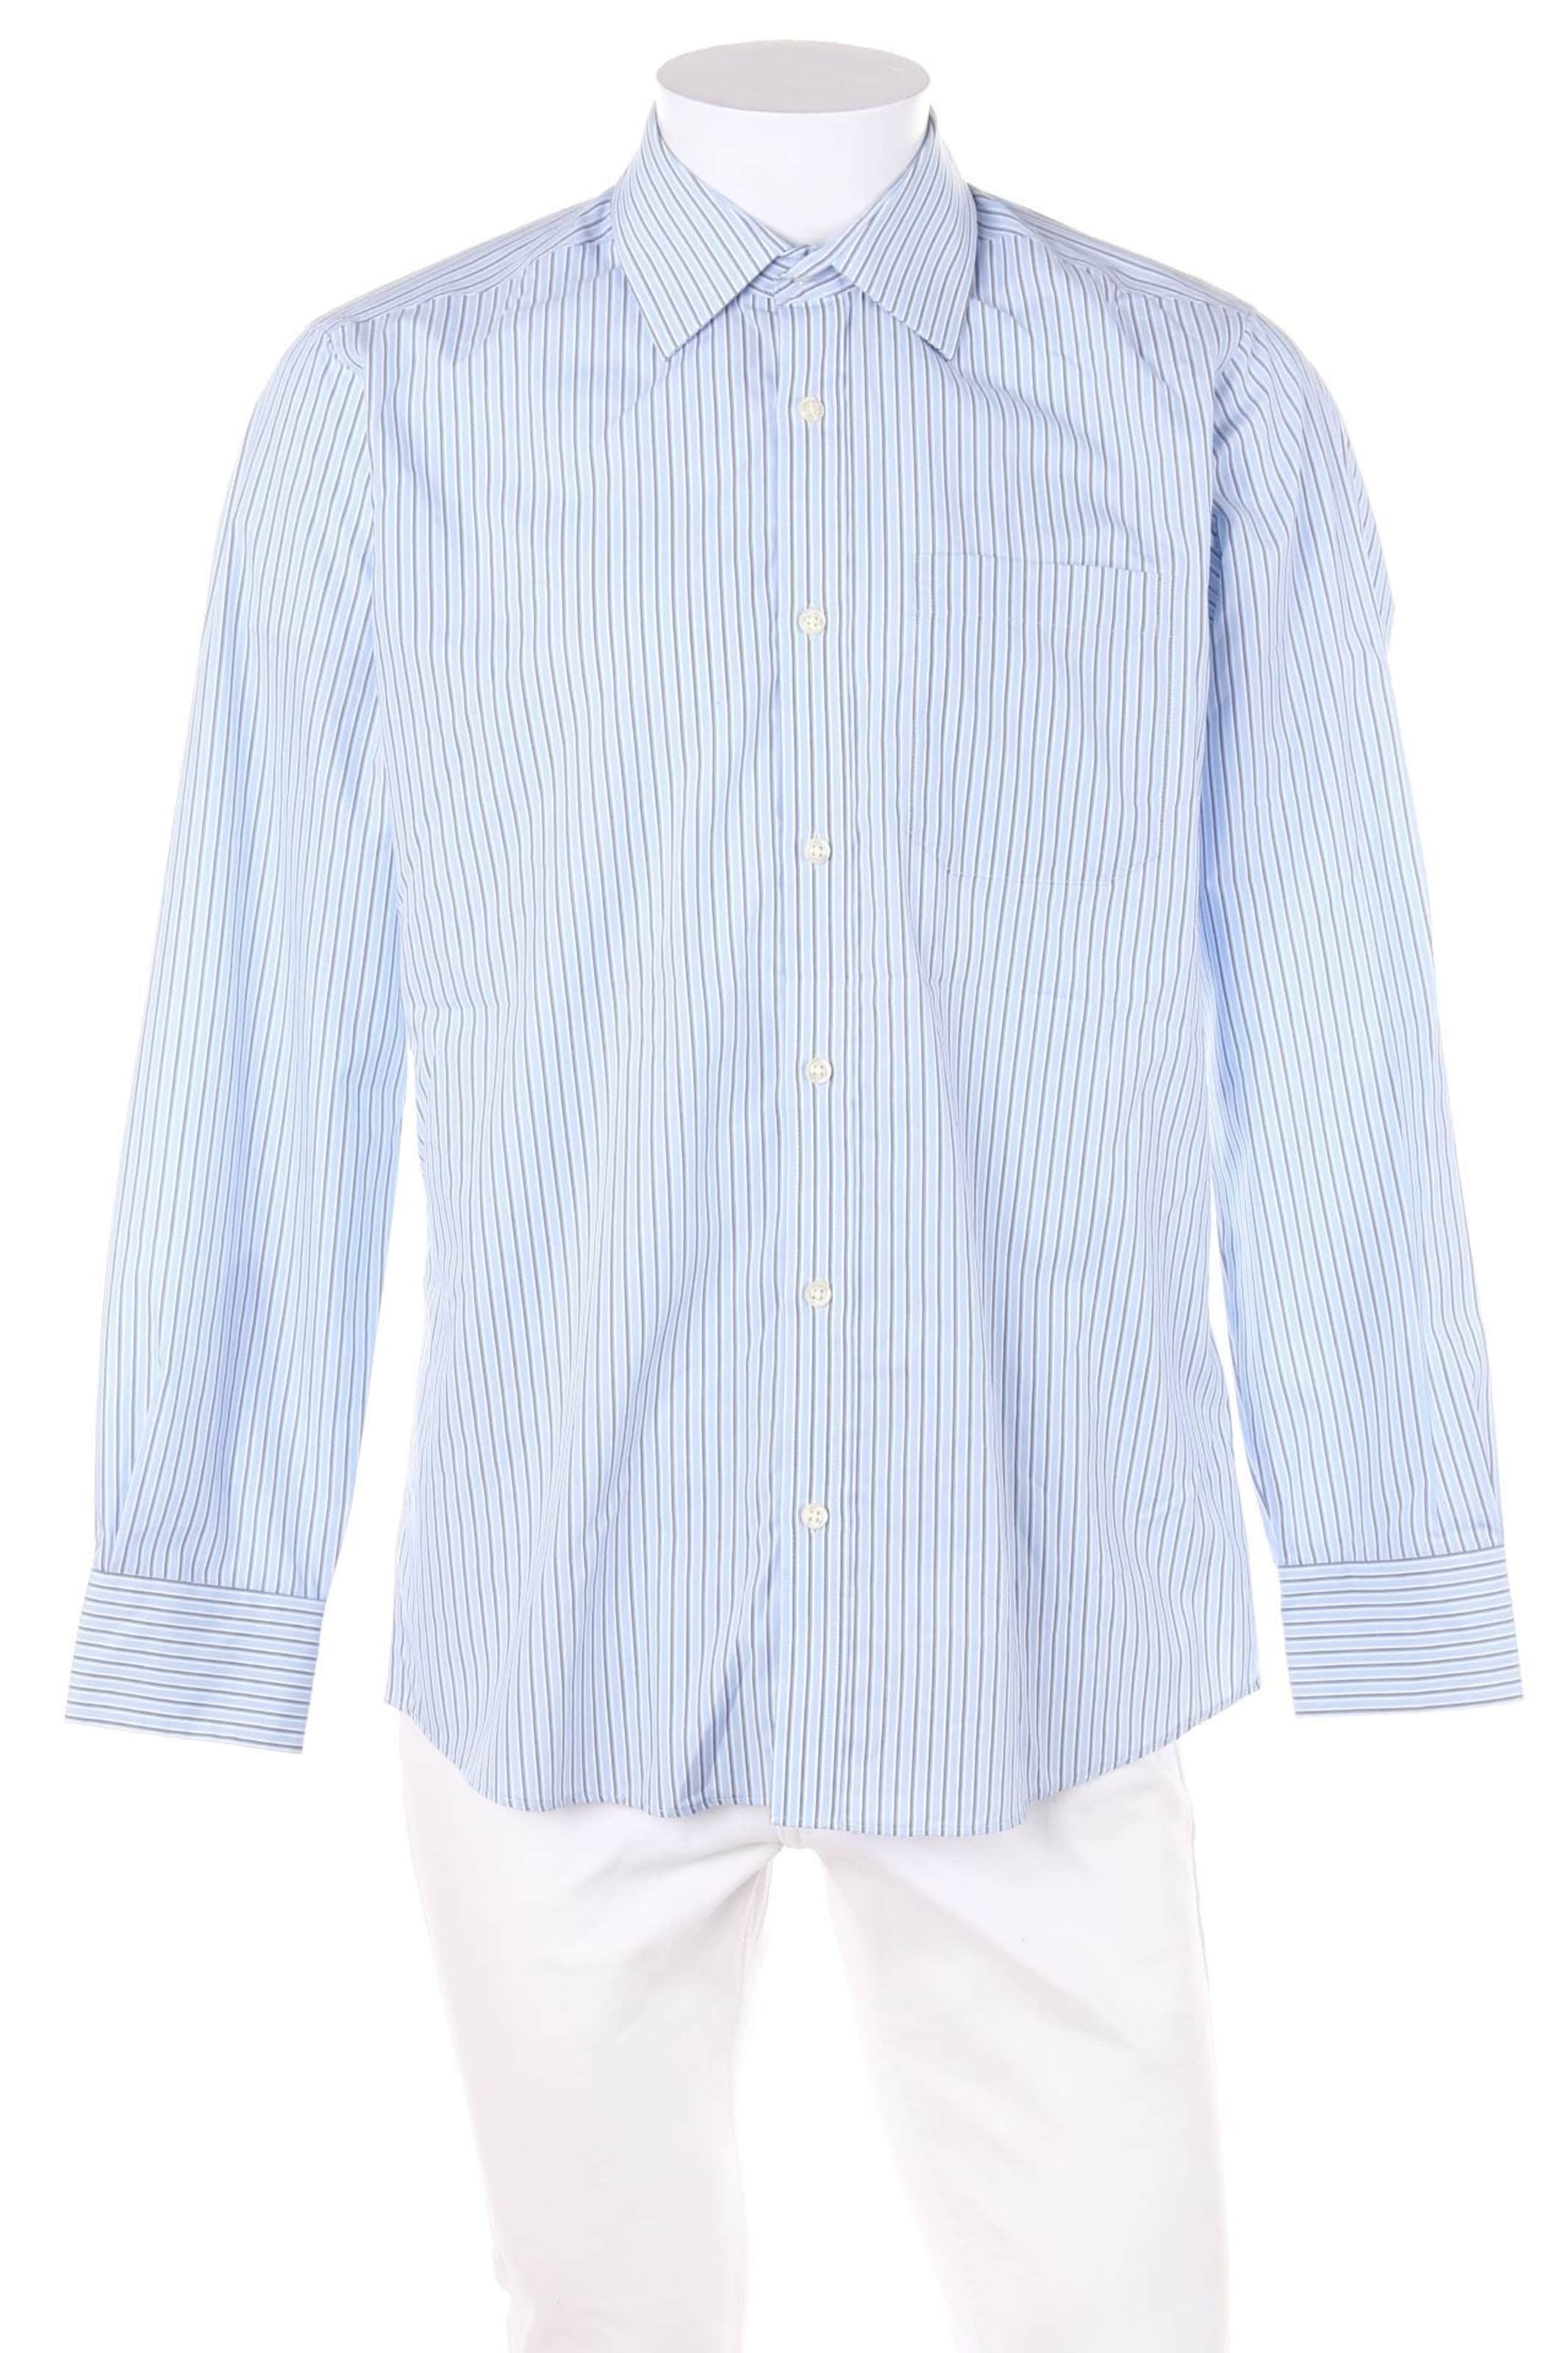 Fashion Formal Shirts Long Sleeve Shirts Charles Vögele Charles V\u00f6gele Long Sleeve Shirt blue striped pattern casual look 